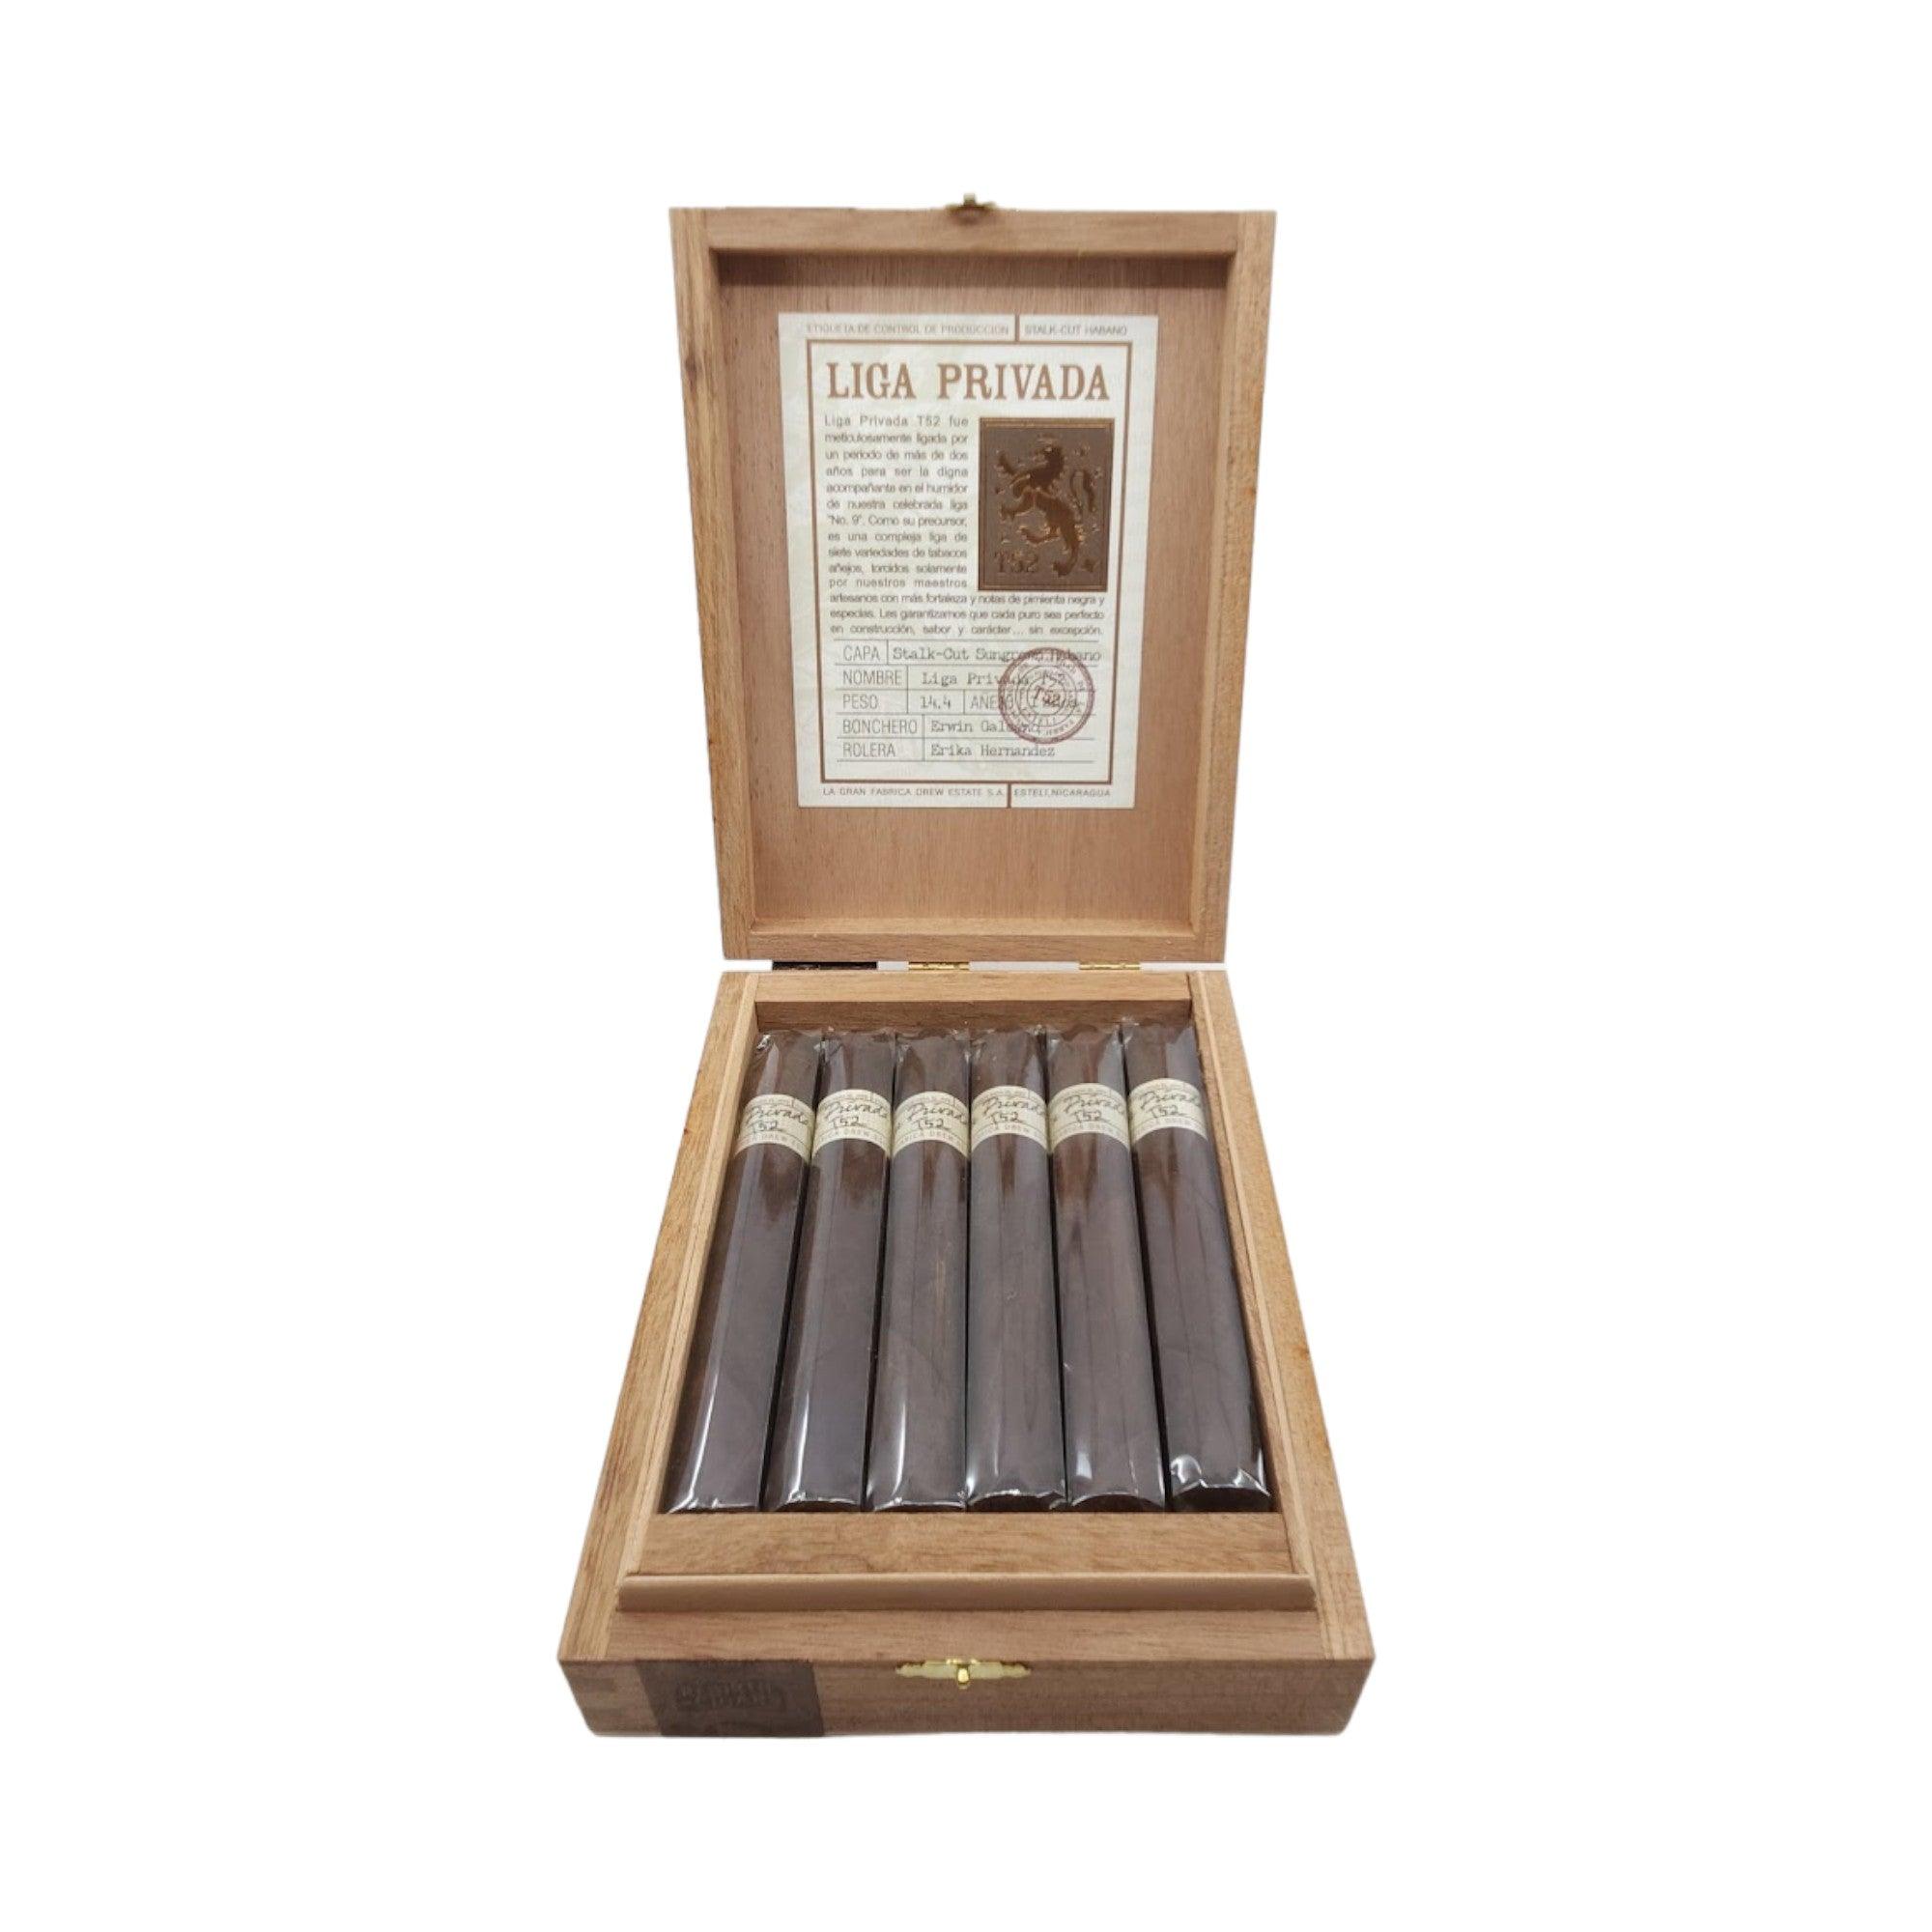 Drew Estate Cigar | Liga Privada T52 Belicoso | Box 12 - hk.cohcigars